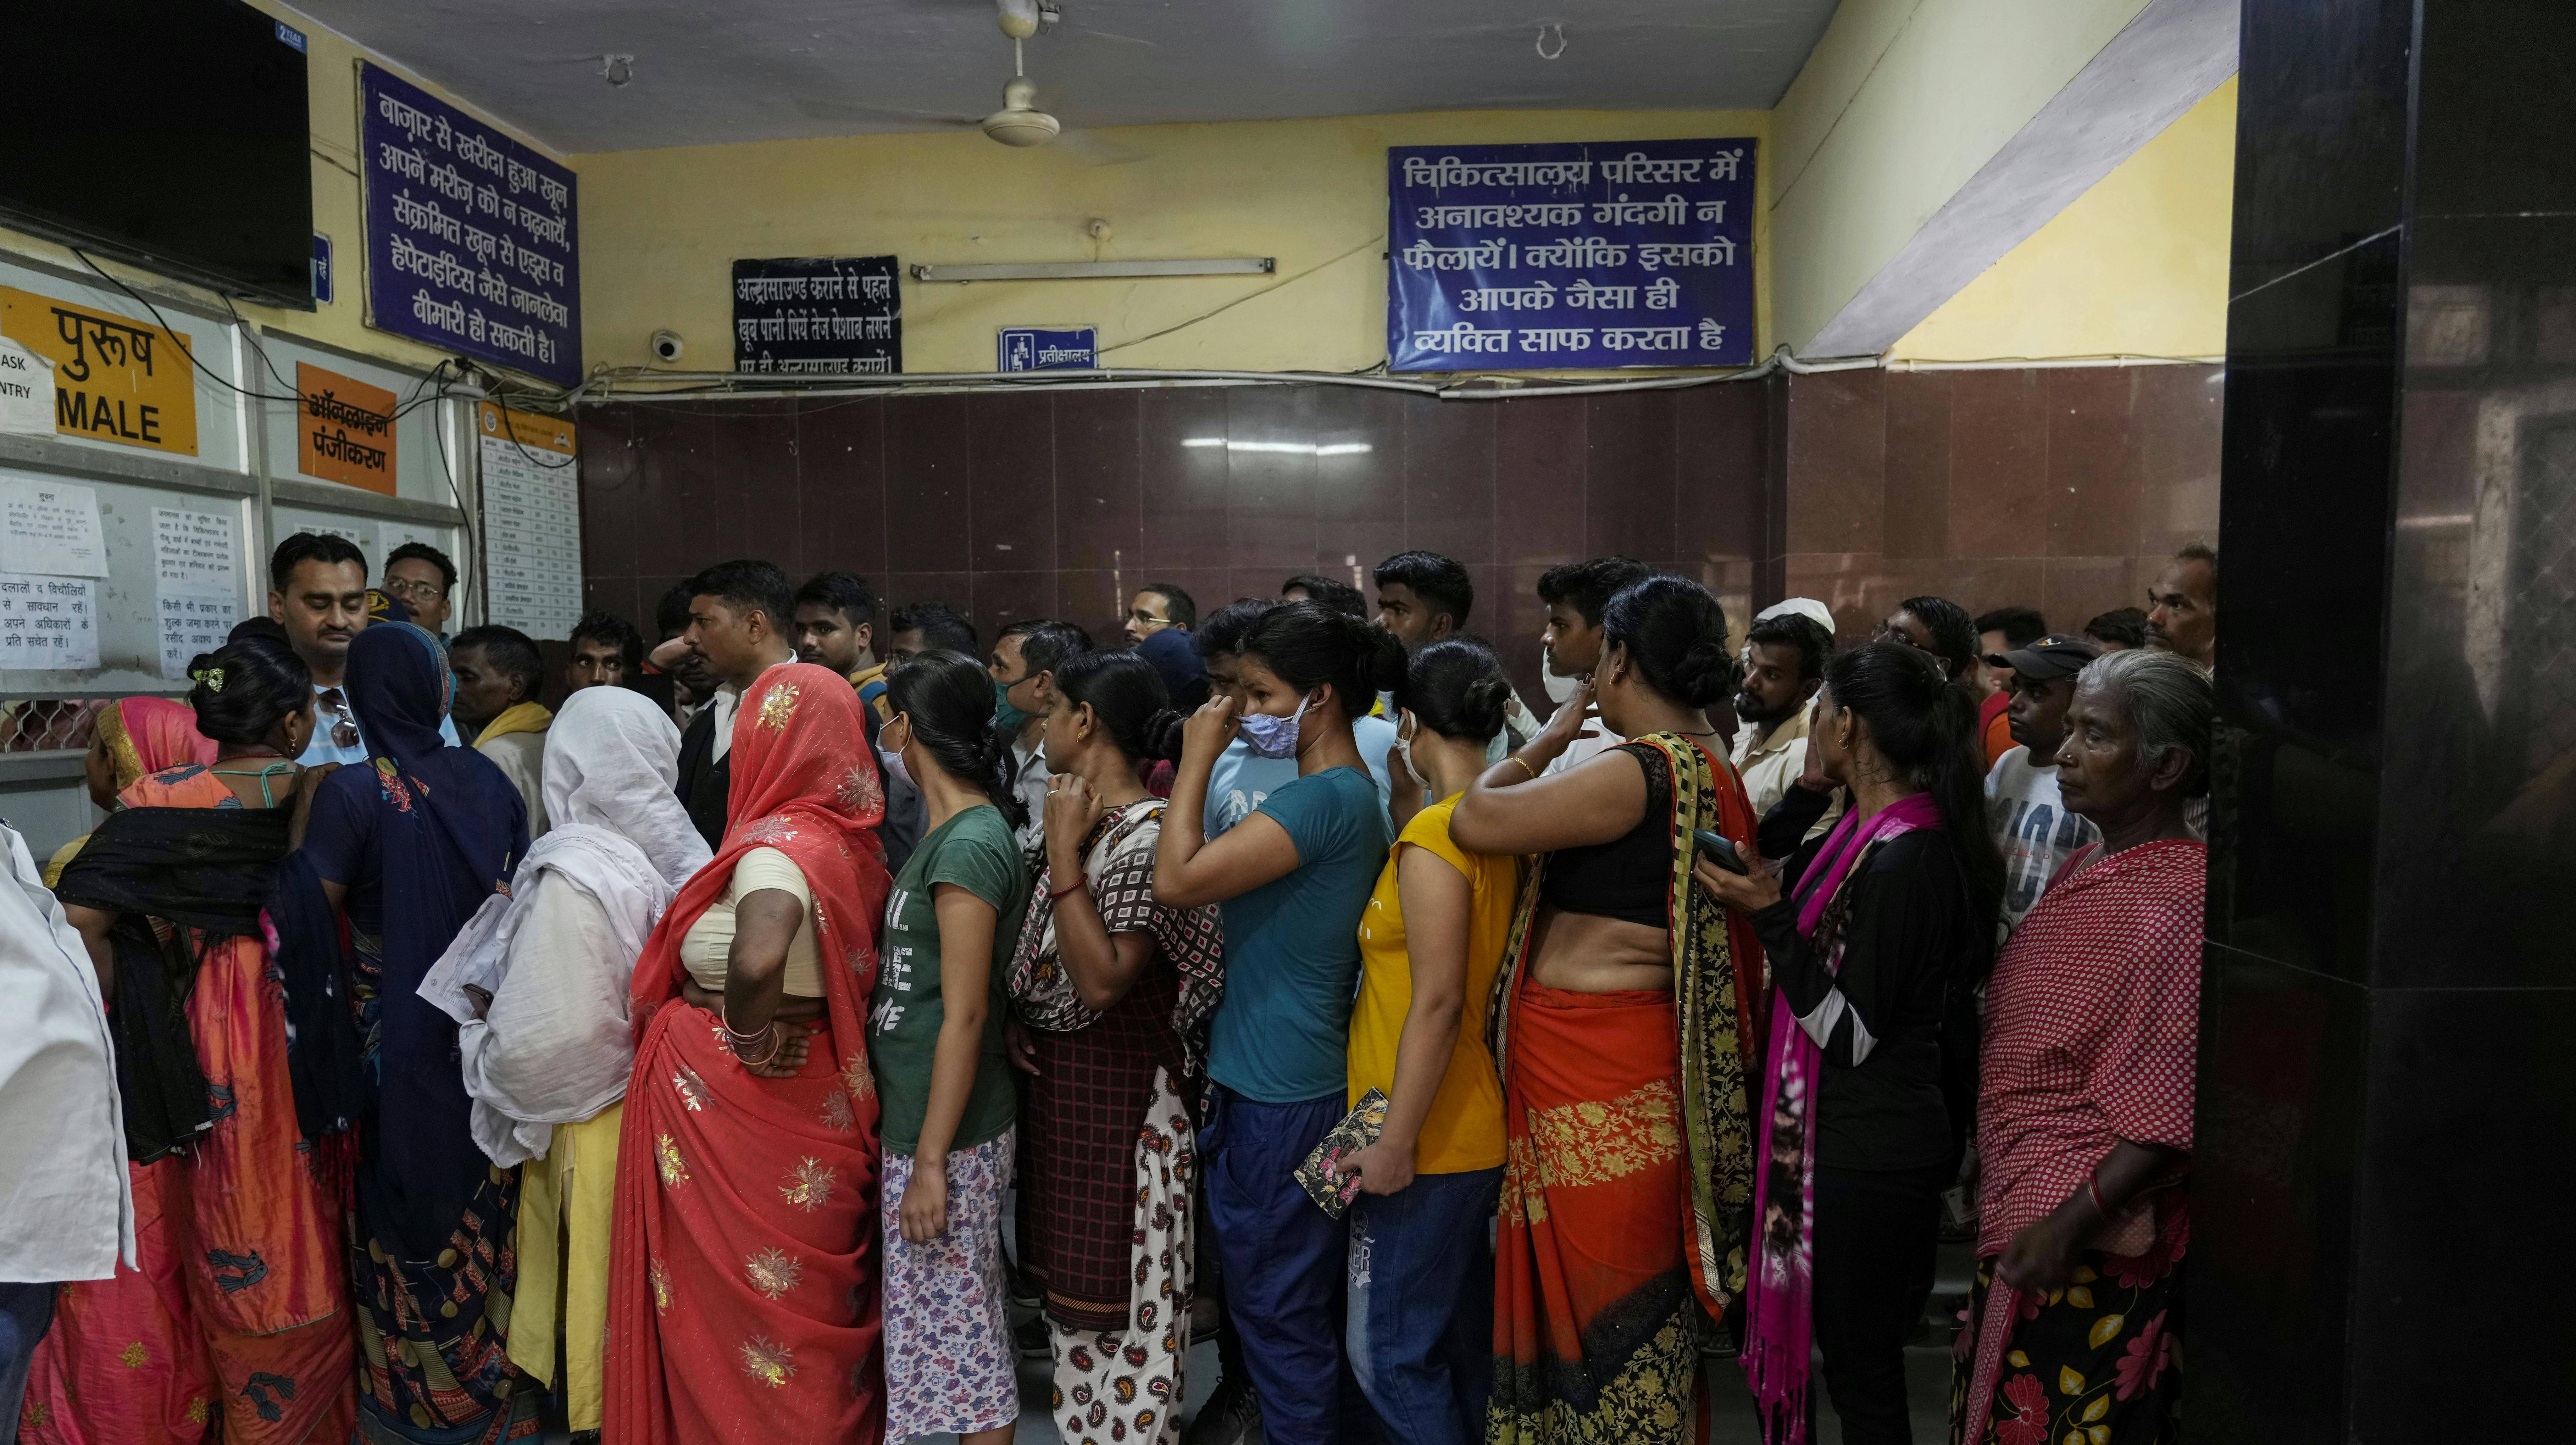 Folk stimler sammen på&nbsp;Tej Bahadur Sapru Hospital i Prayagraj for at modtage behandling under hedebølgen.&nbsp;&nbsp;